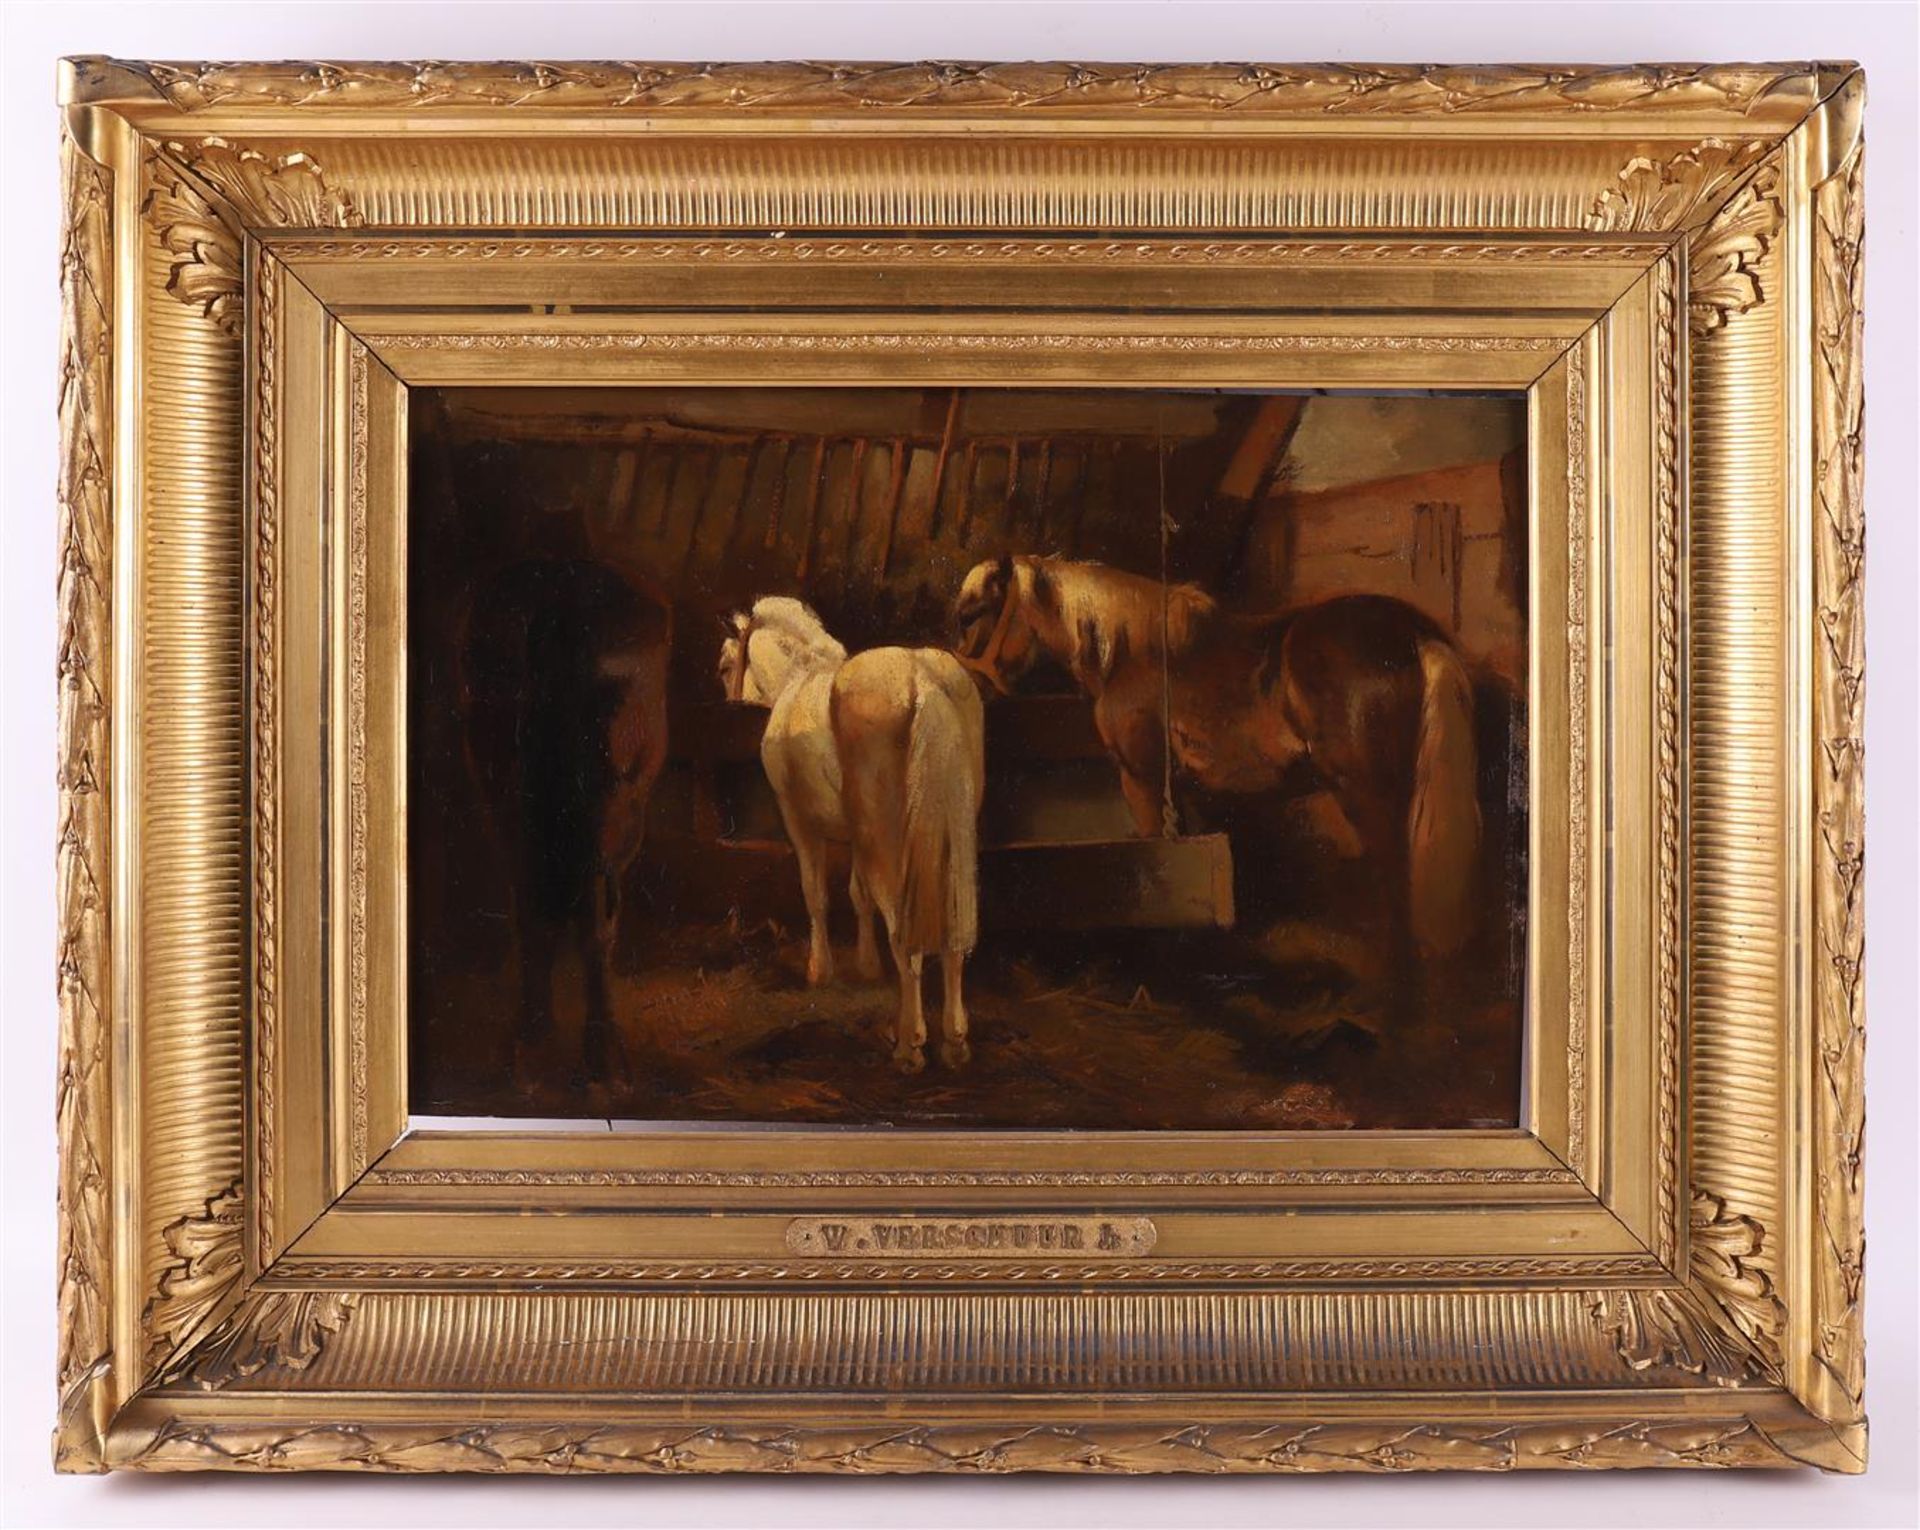 Verschuur, W Jr. (attributed to) “Horses in the stable”, - Bild 2 aus 4